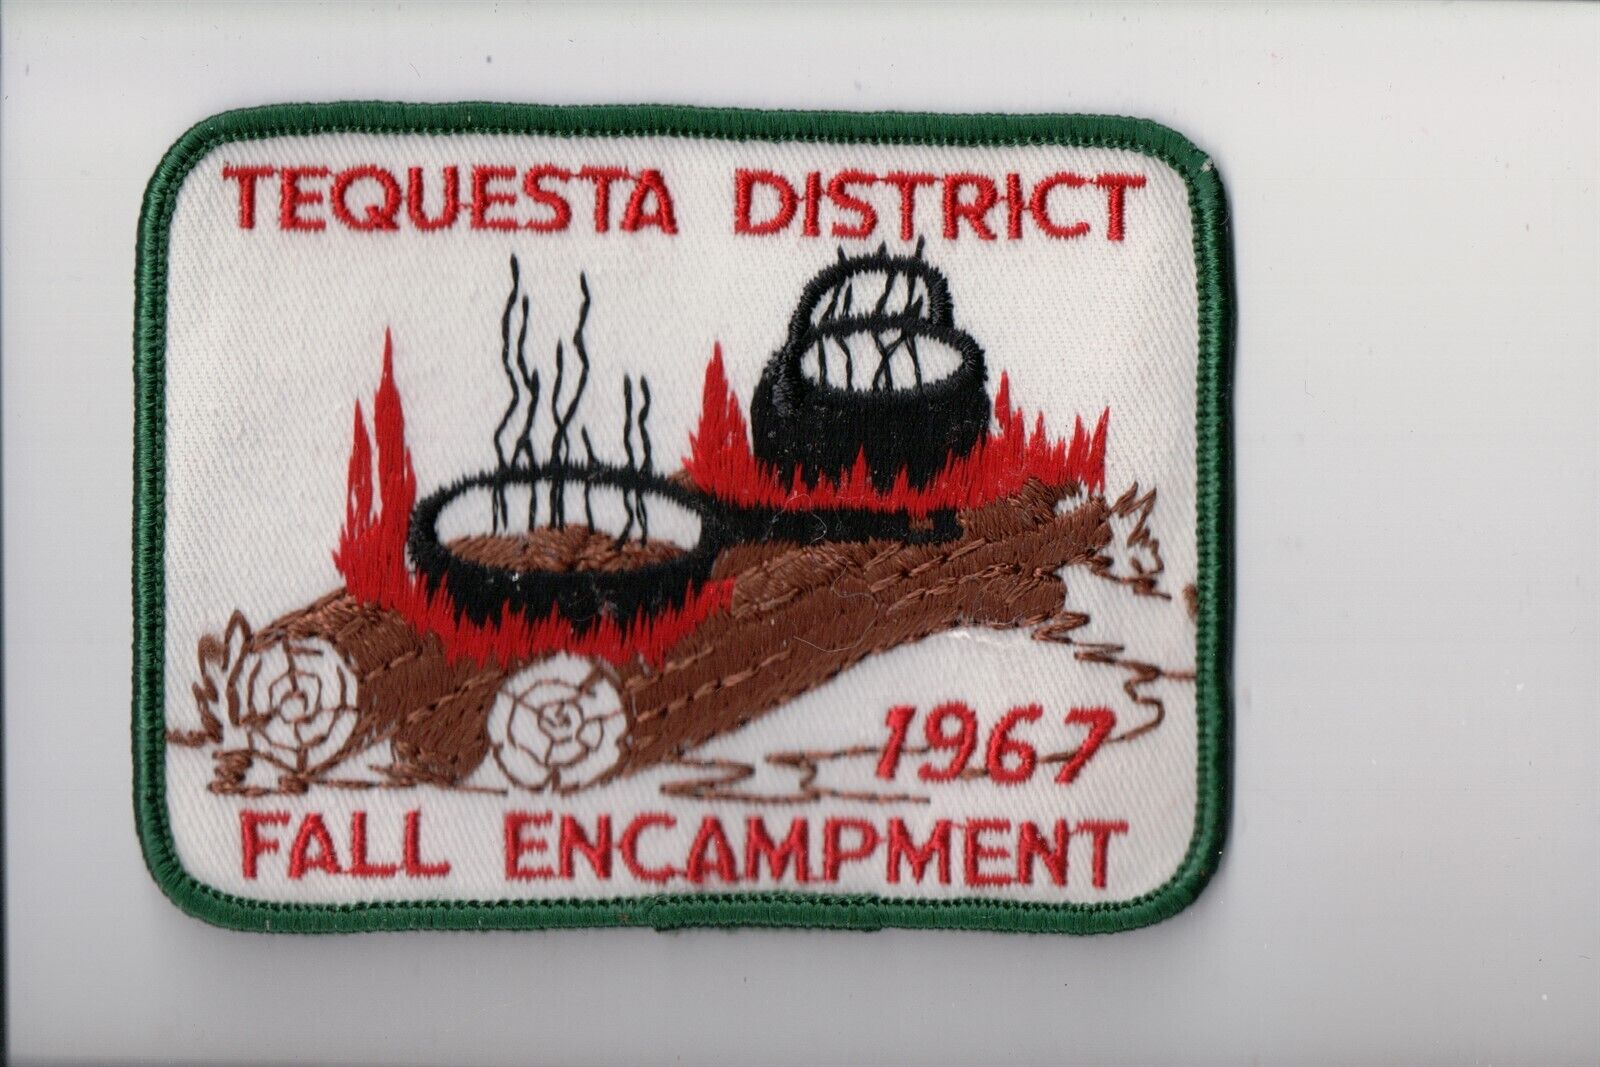 1967 Tequesta District Fall Encampment patch